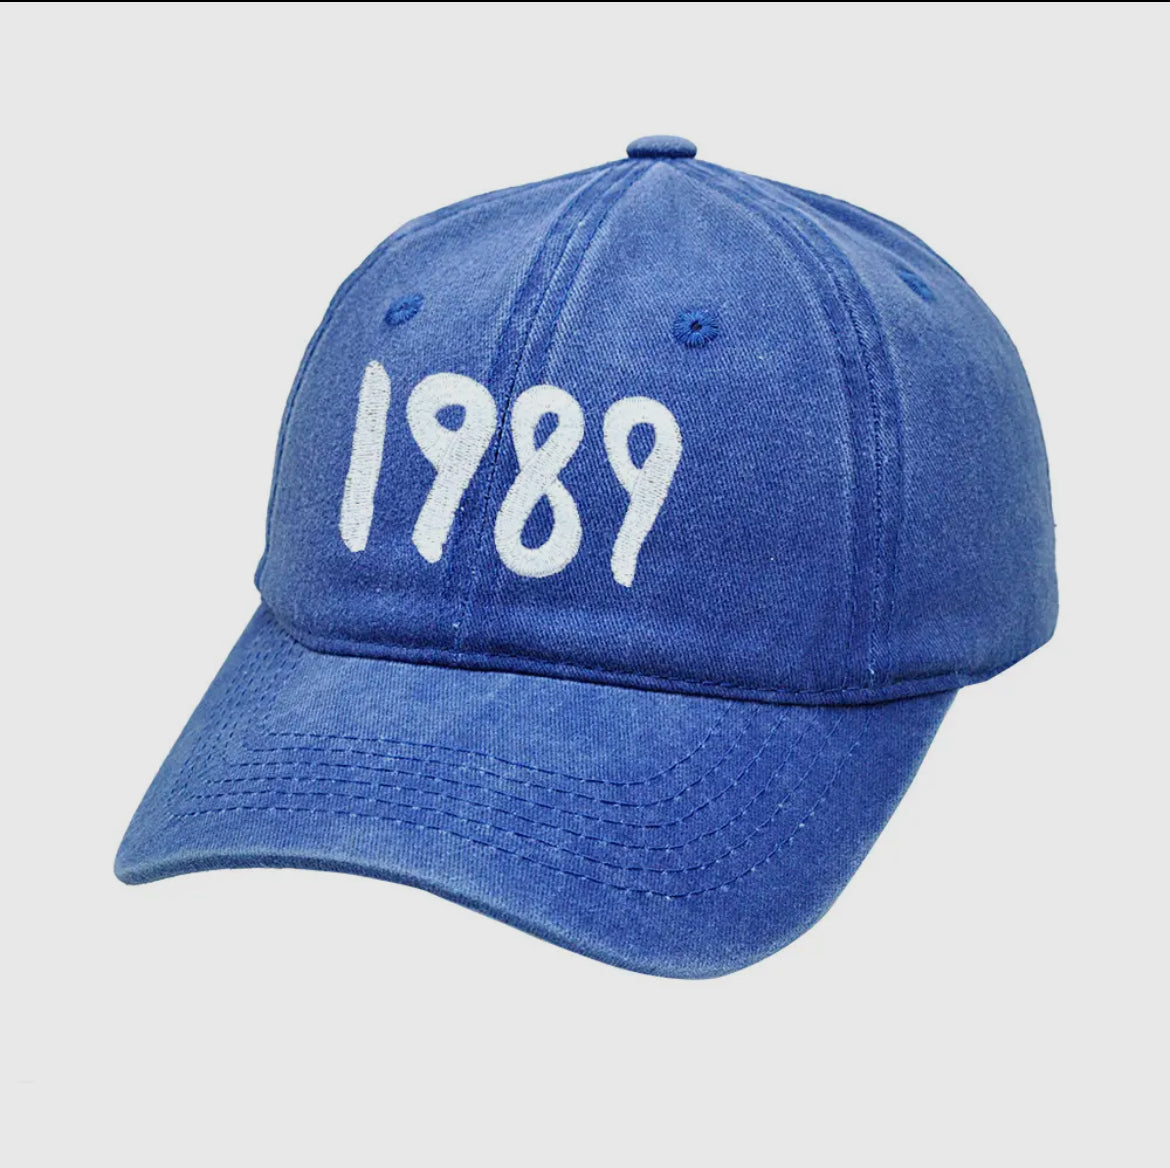 TS “1989” Embroidered Baseball Cap